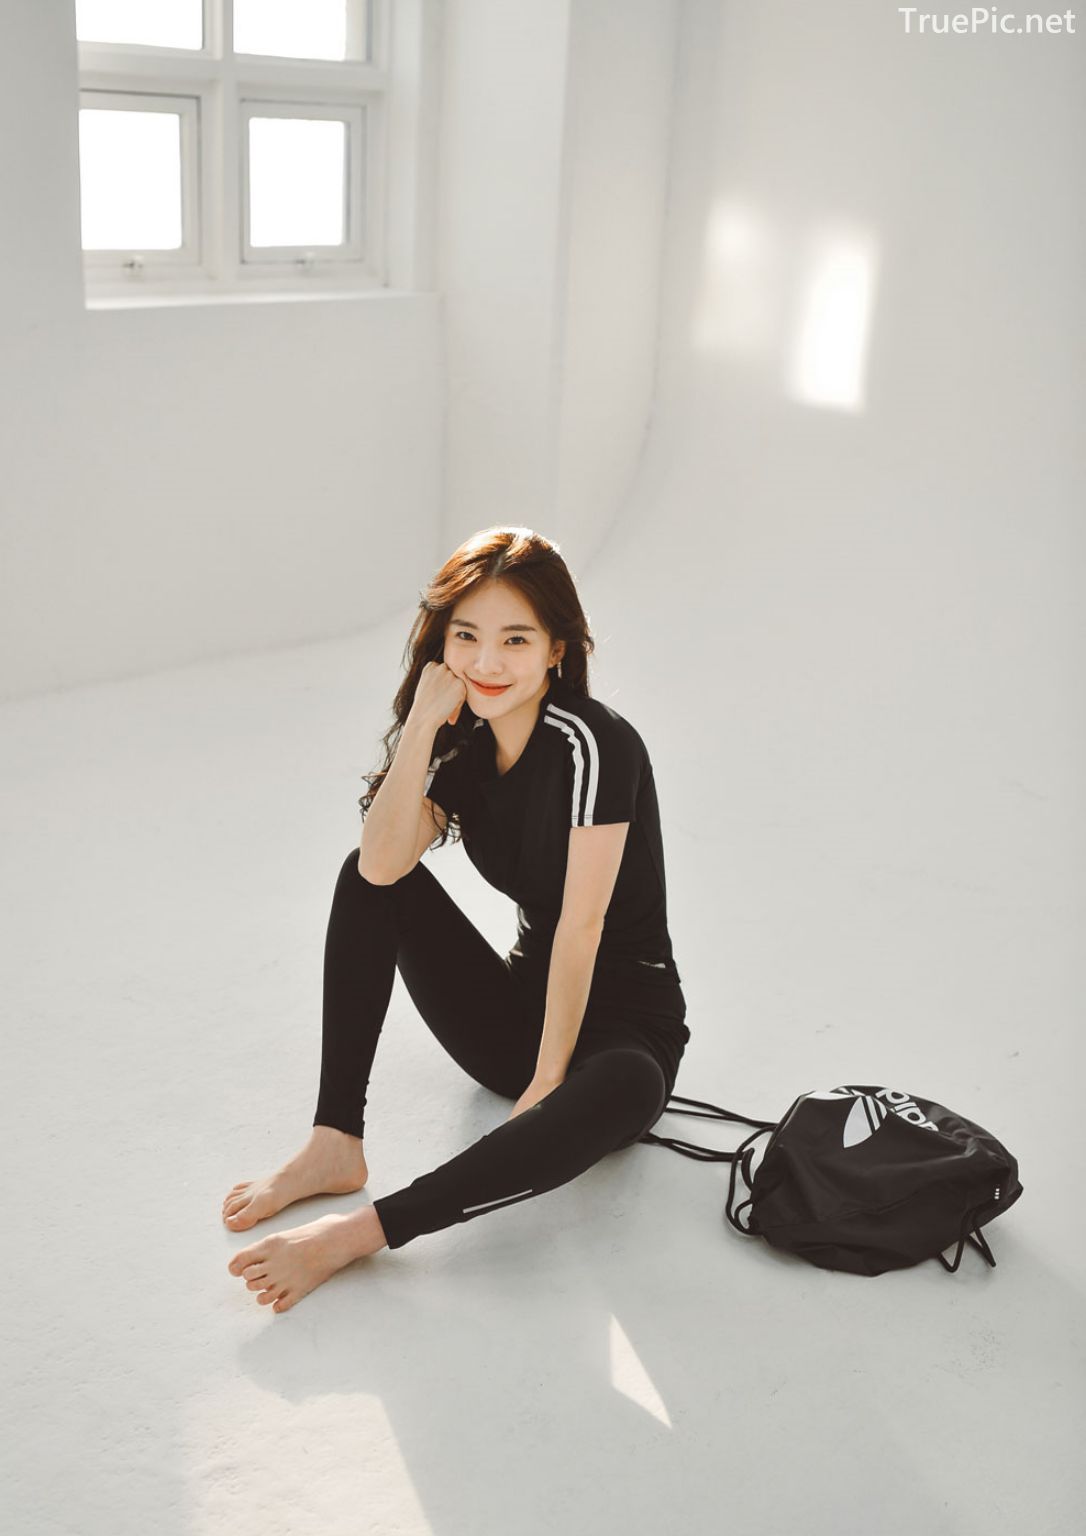 Korean Lingerie Queen - Haneul - Fitness Set Collection - TruePic.net - Picture 68